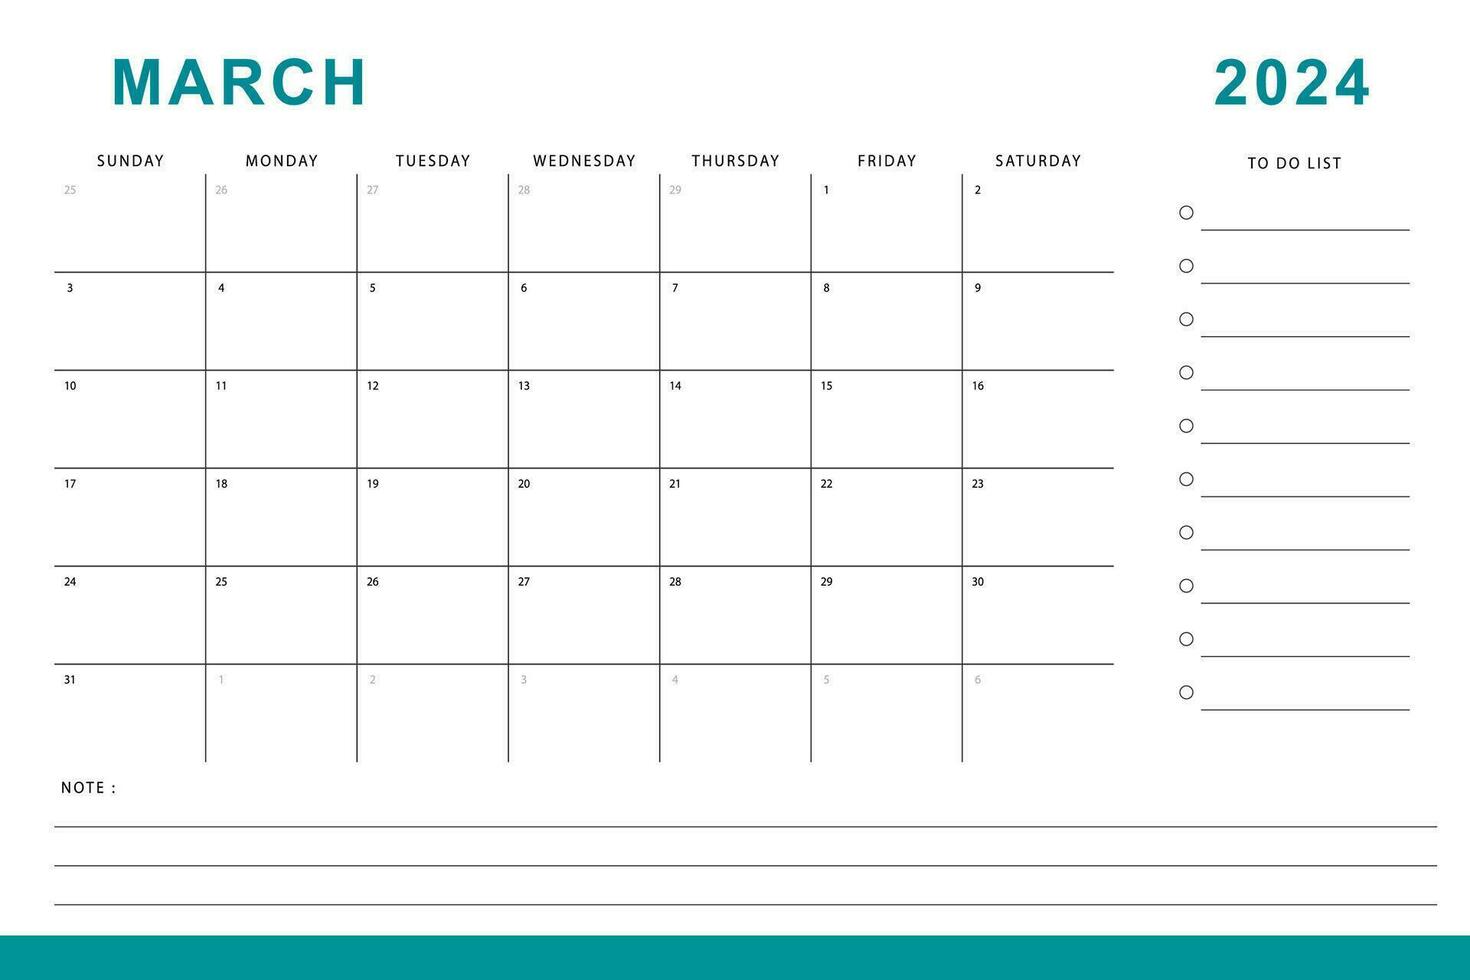 marzo 2024 calendario. mensual planificador modelo. domingo comenzar. vector diseño